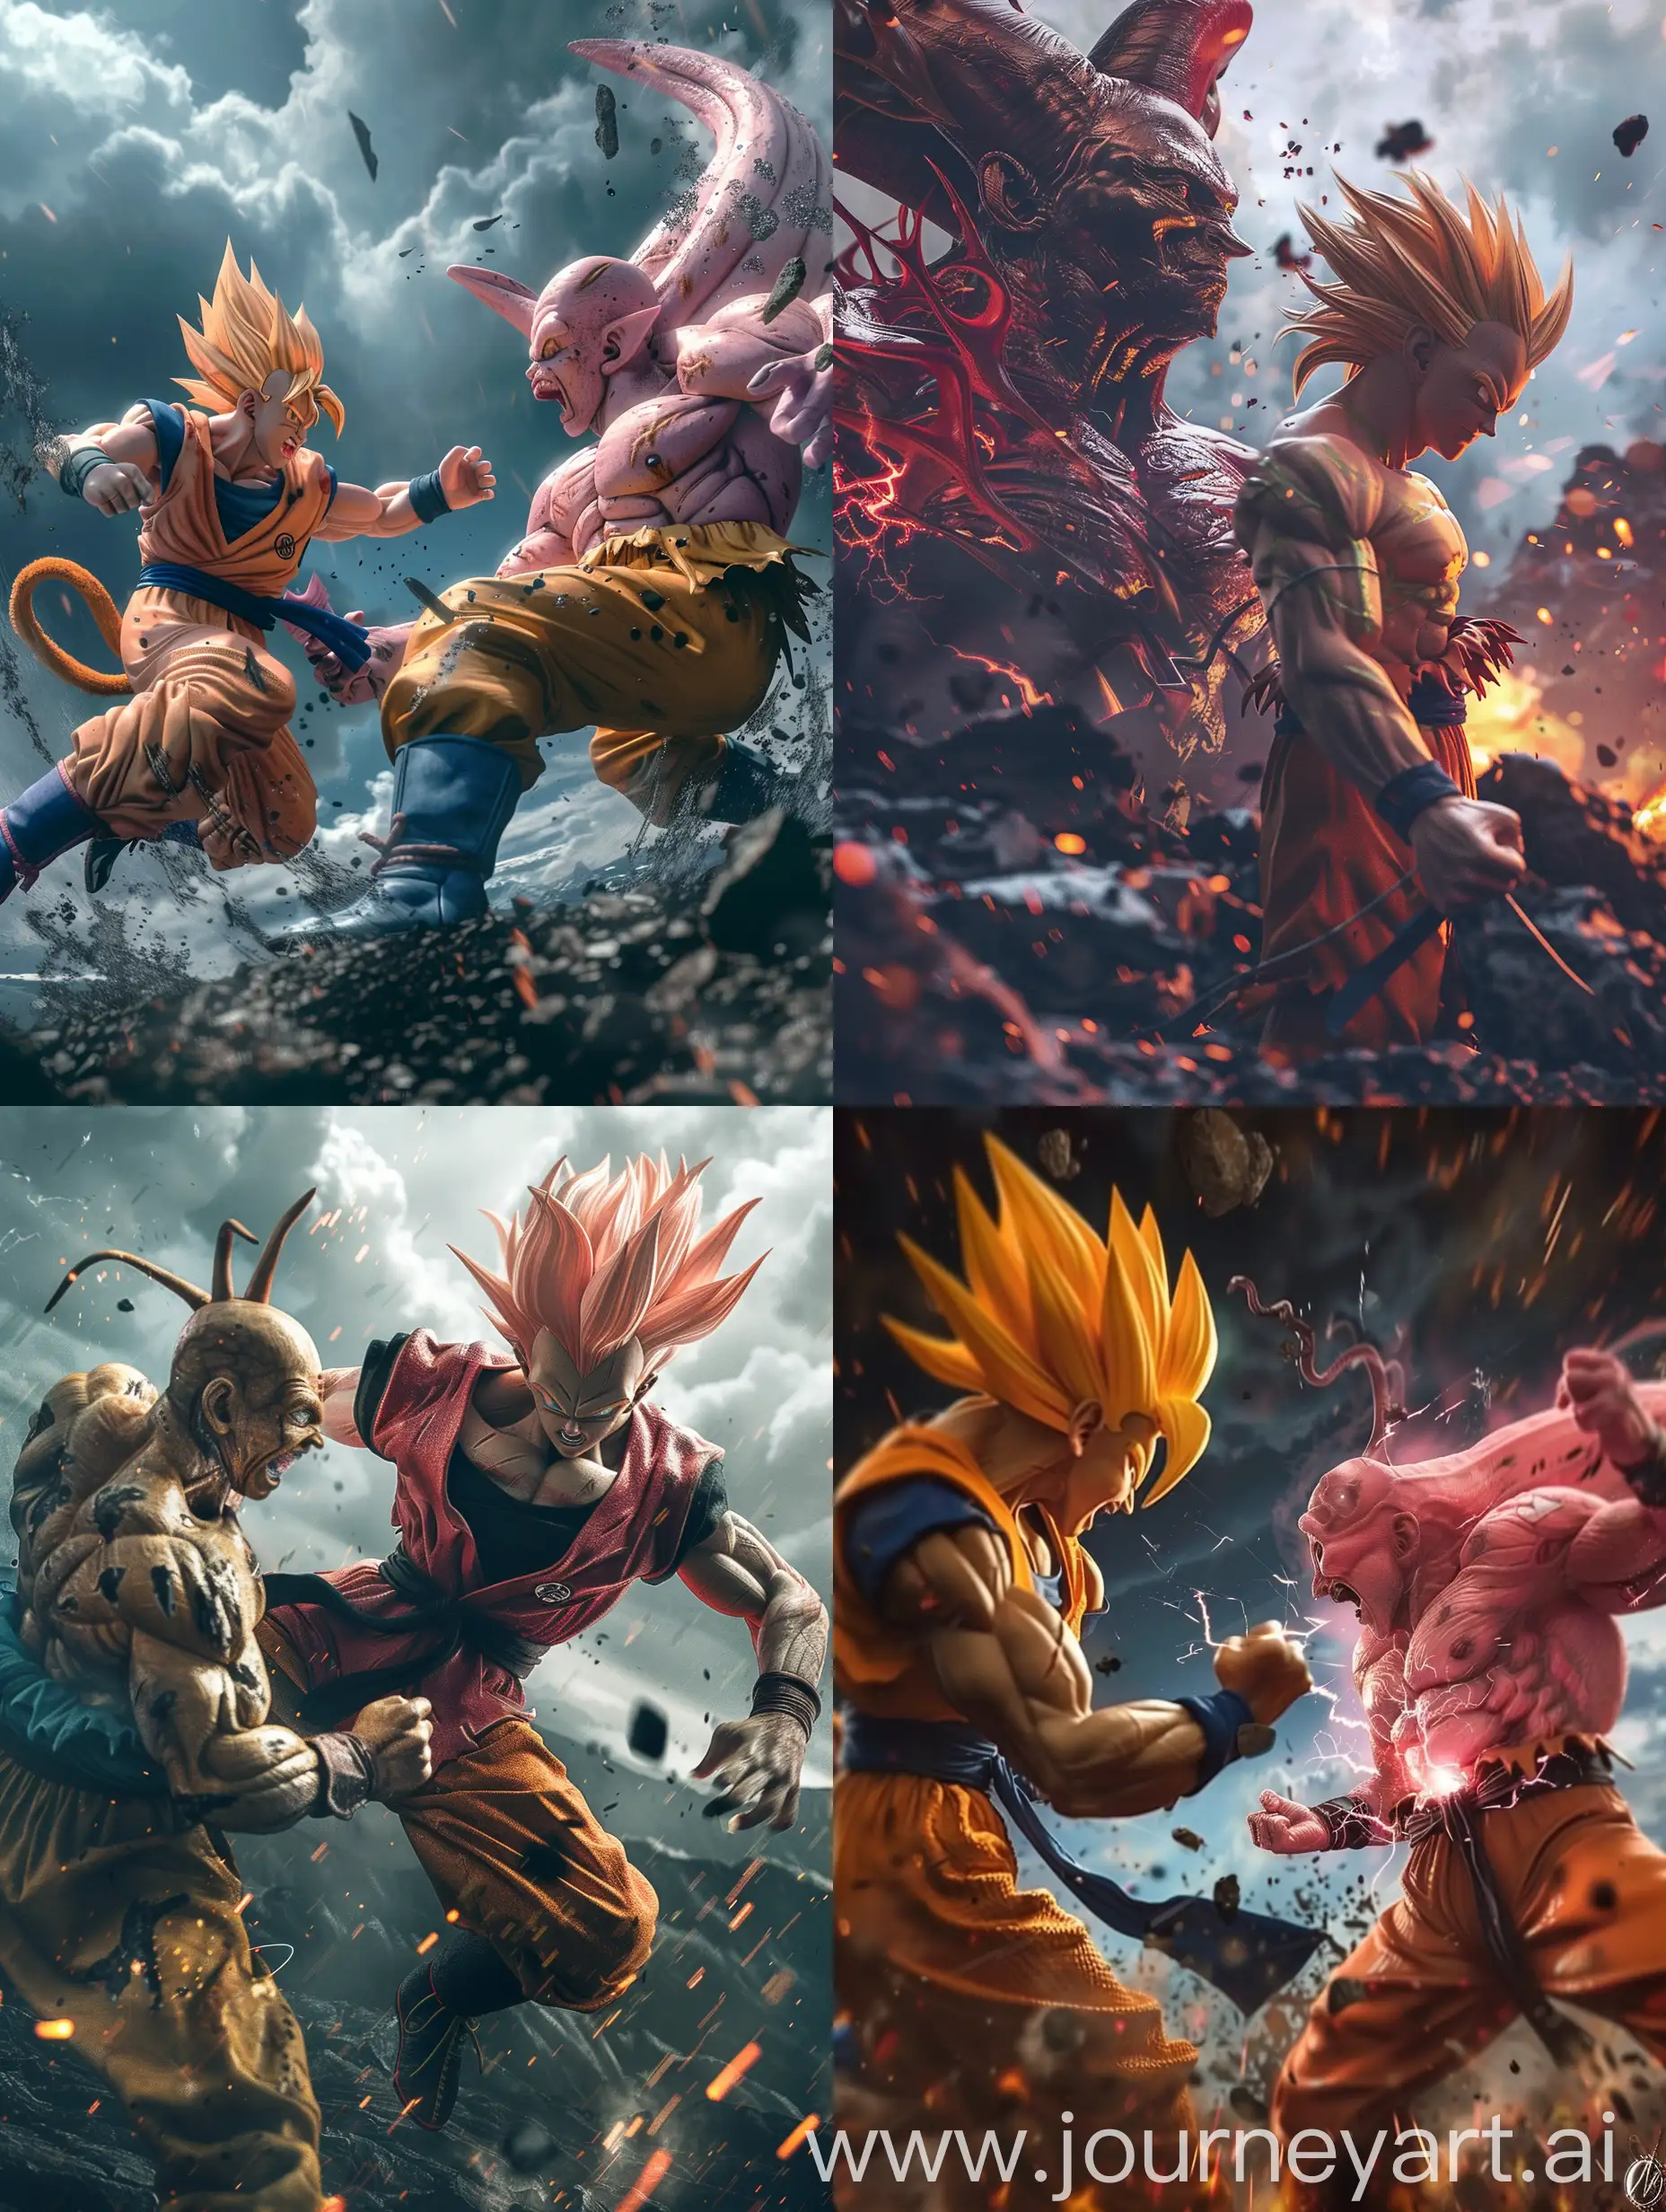 Epic-Battle-Son-Goku-Faces-Majin-Buu-in-Cinematic-8K-Action